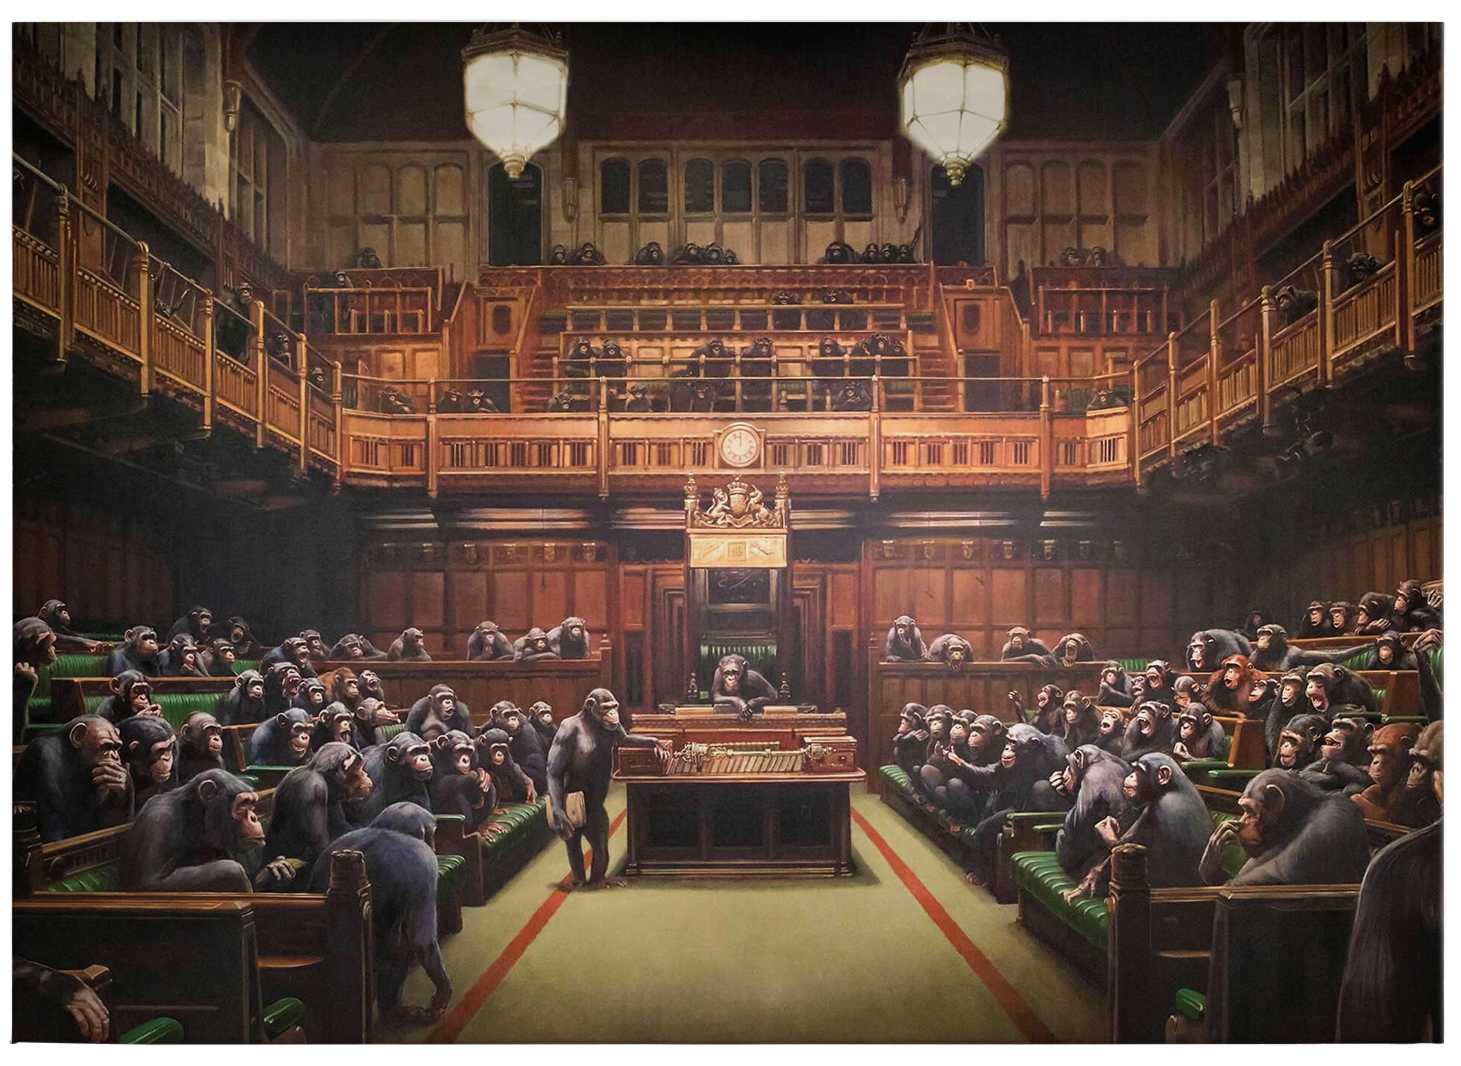             Canvas print Banksy "Devolved Parliament" painting
        